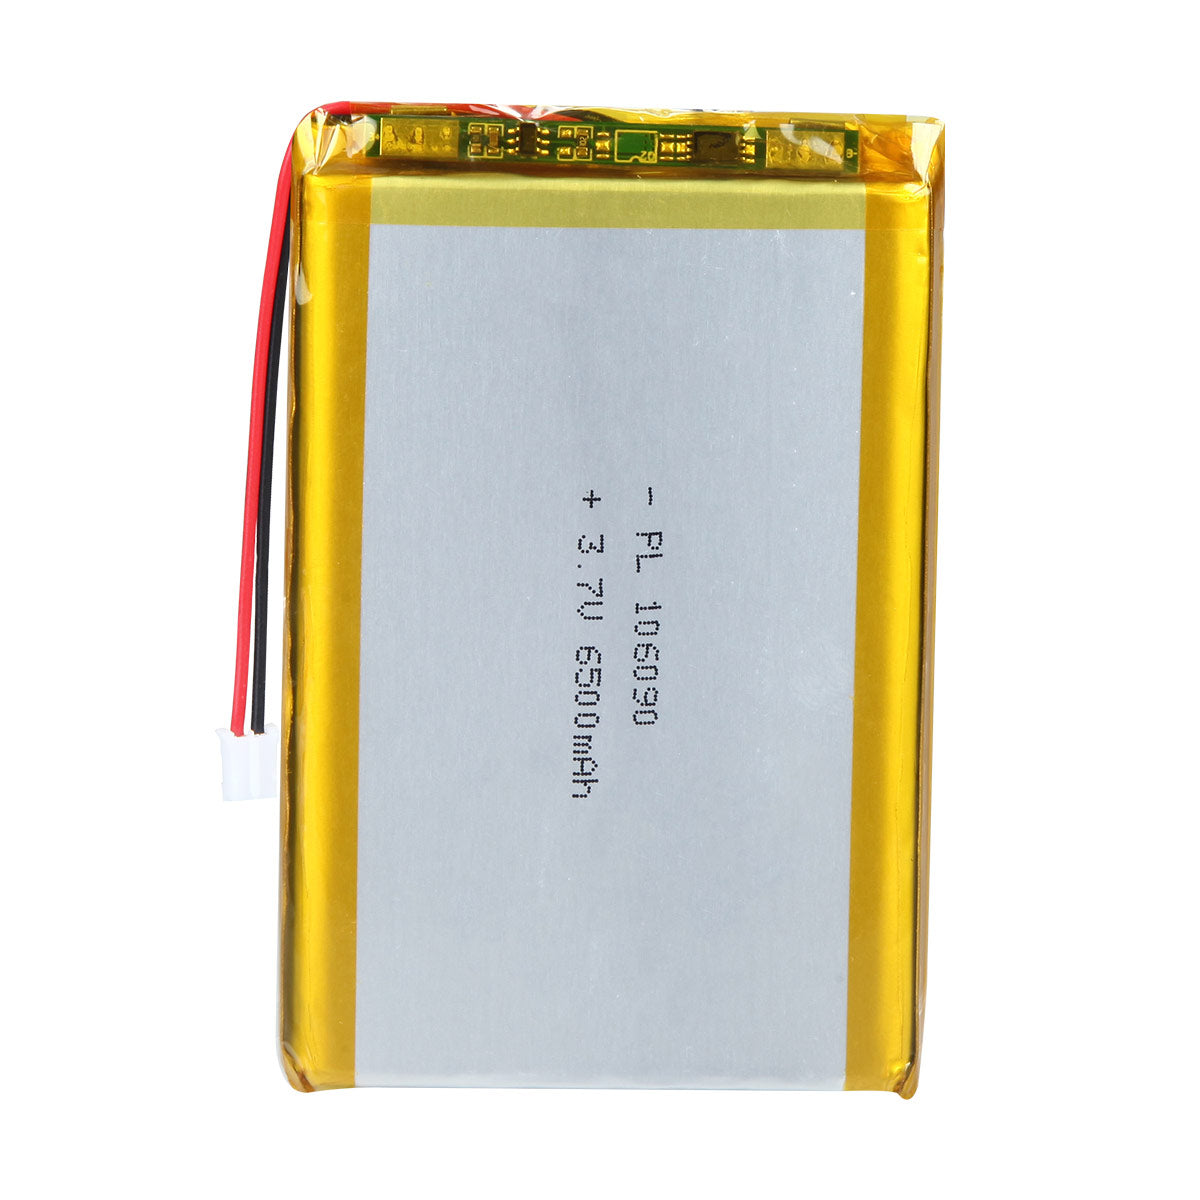 YDL 3.7V 6500mAh 106090 Batterie Lithium Polymère Rechargeable Longueur 92mm